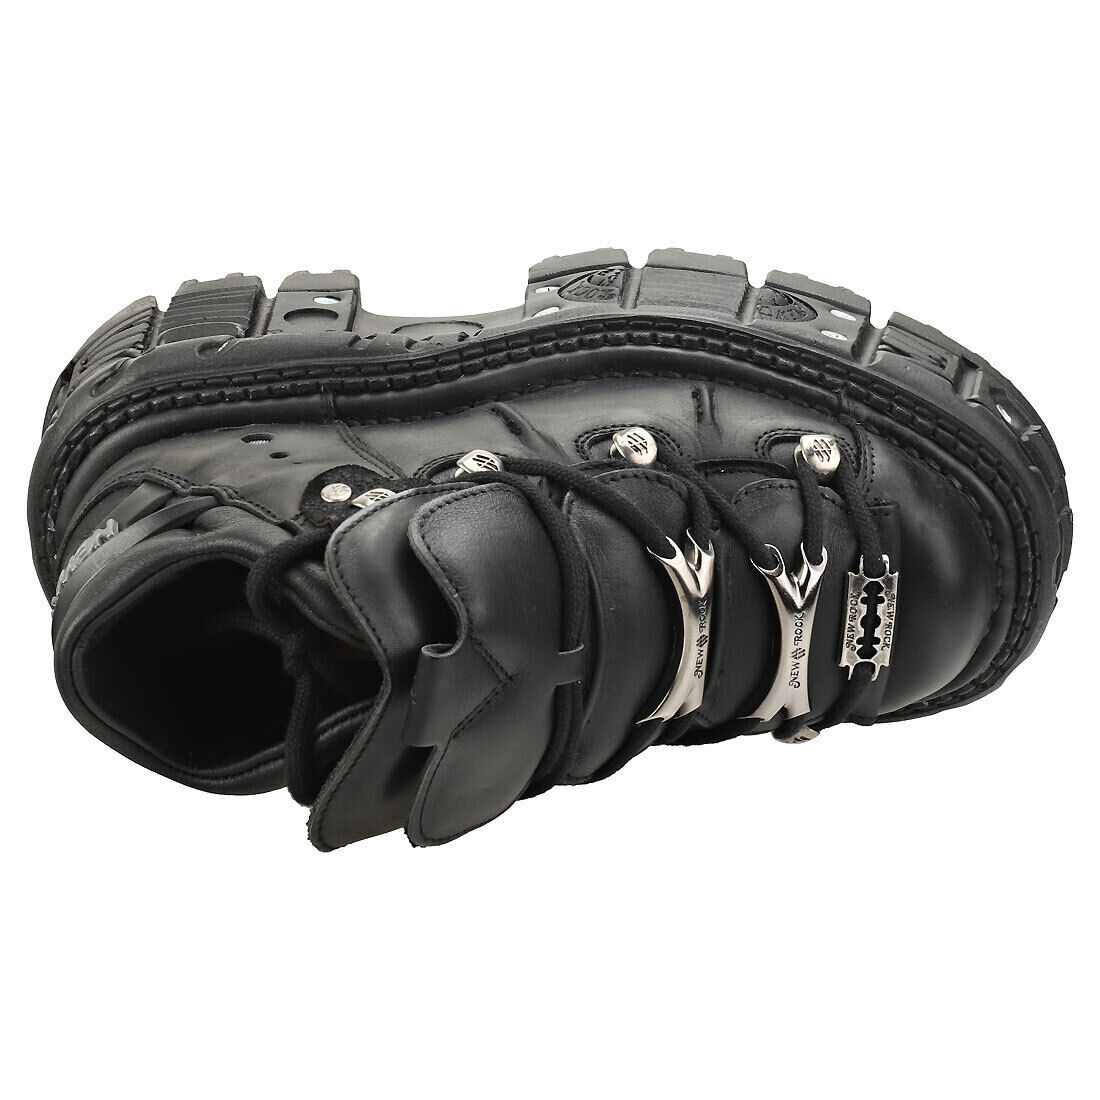 New Rock M-tank106-c2 Unisex Black Platform Shoes | eBay